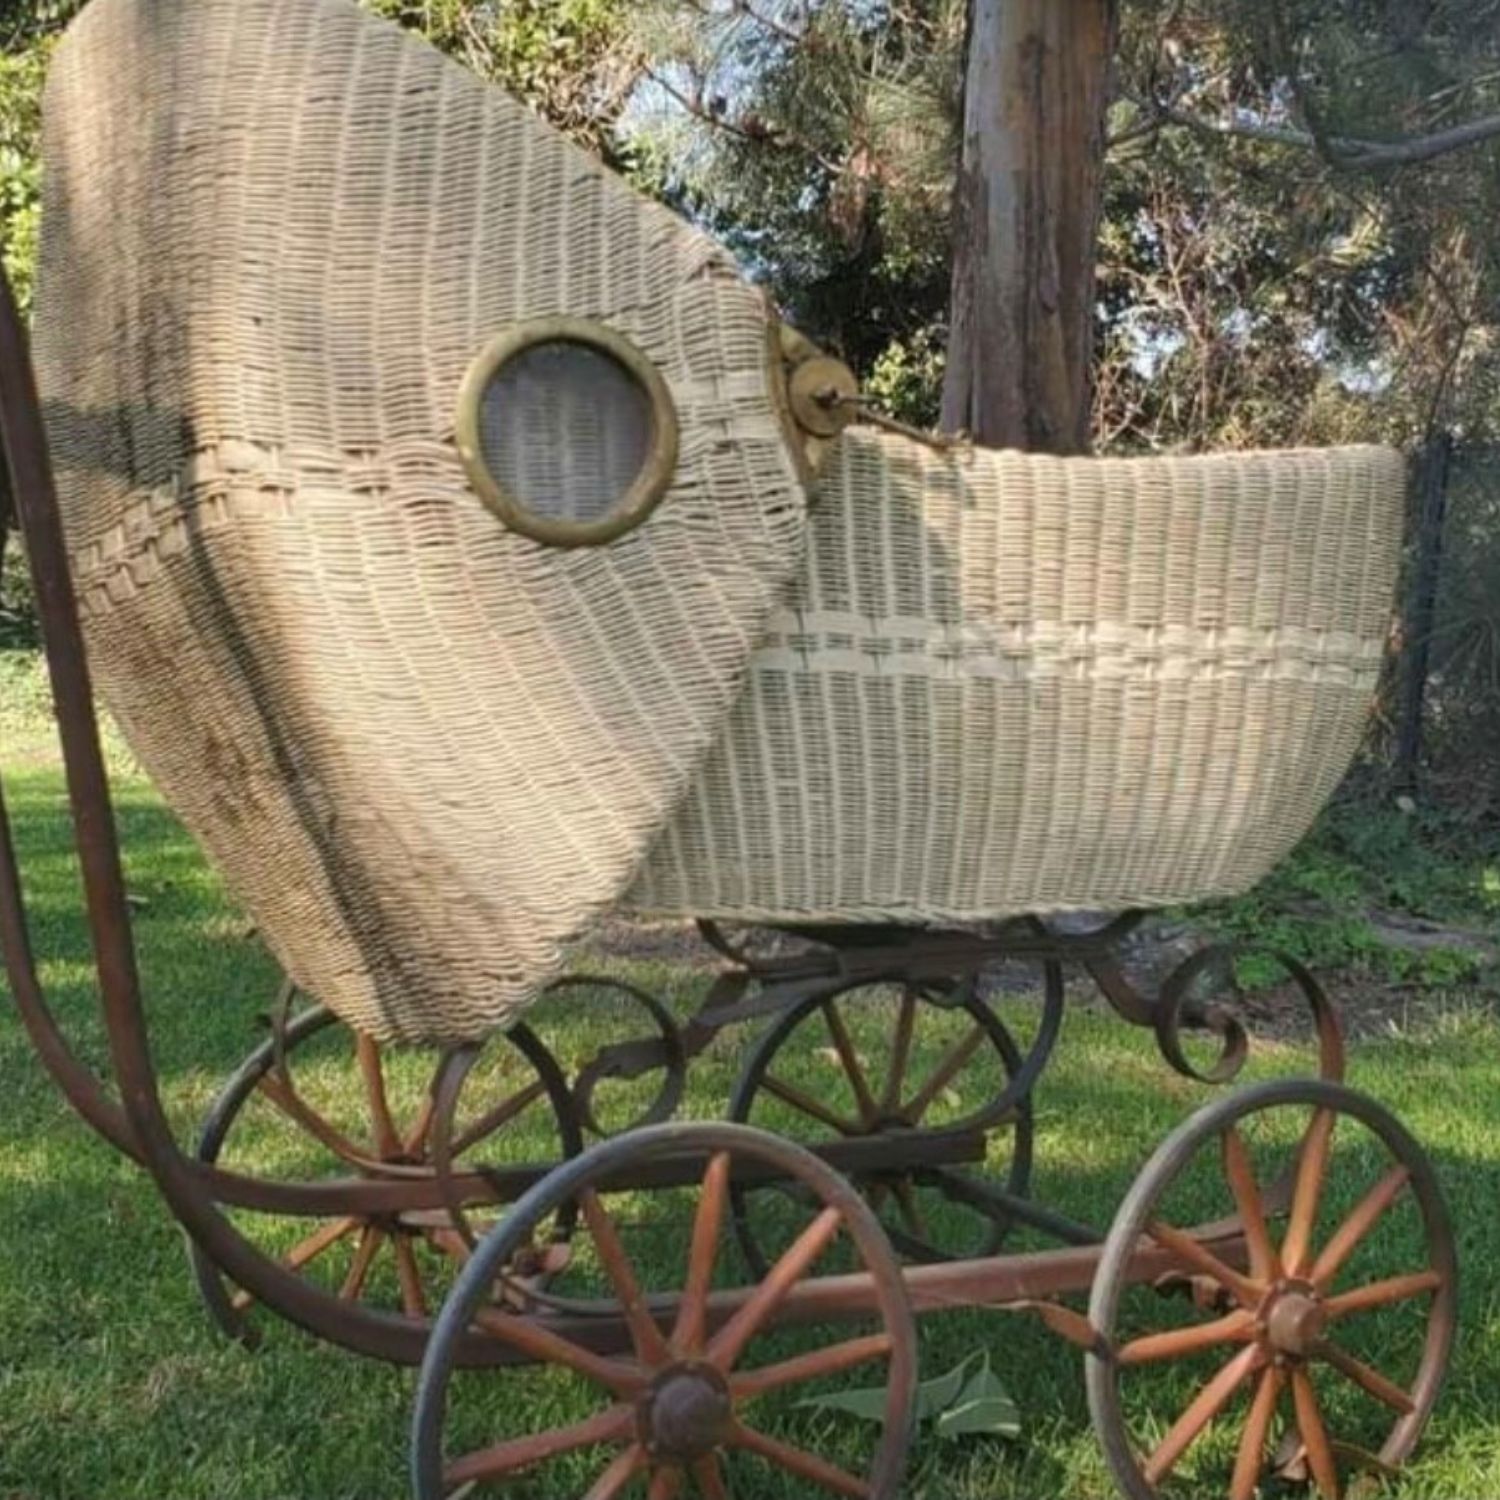 Antique Baby Stroller Vintage Carriage Stroller Buggy Baby Pram